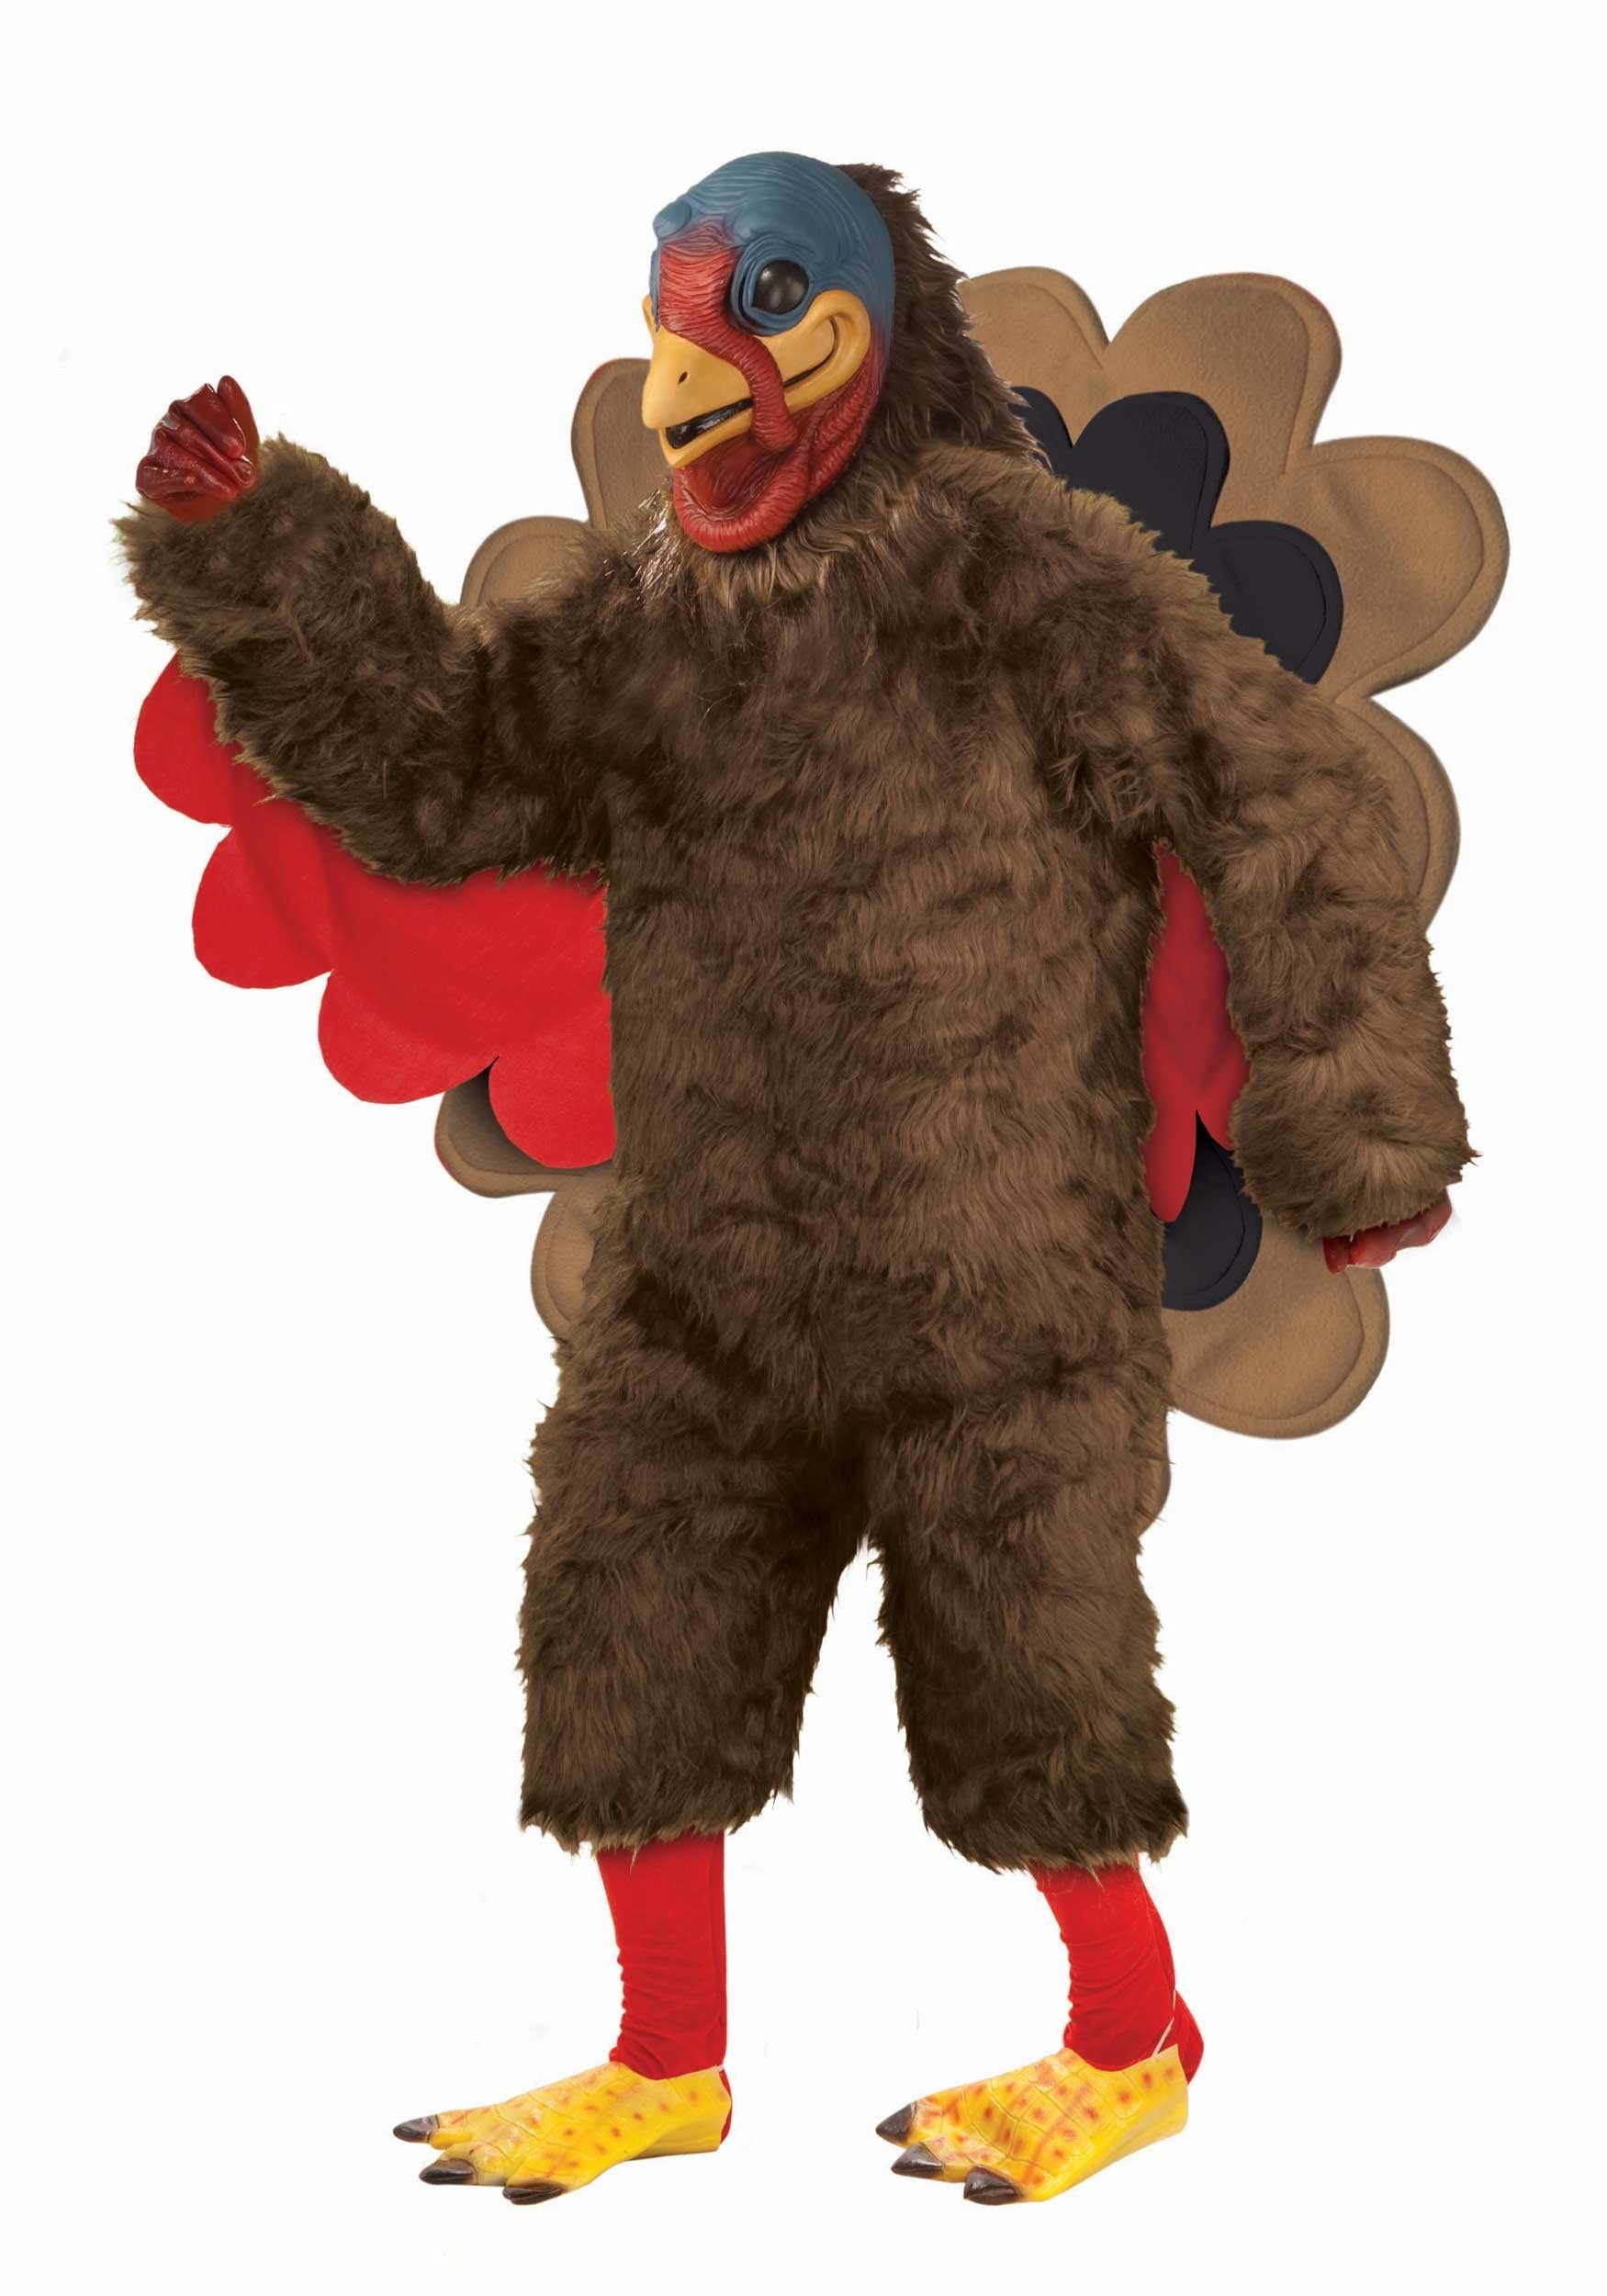 The Adult Deluxe Plush Turkey Mascot Costume